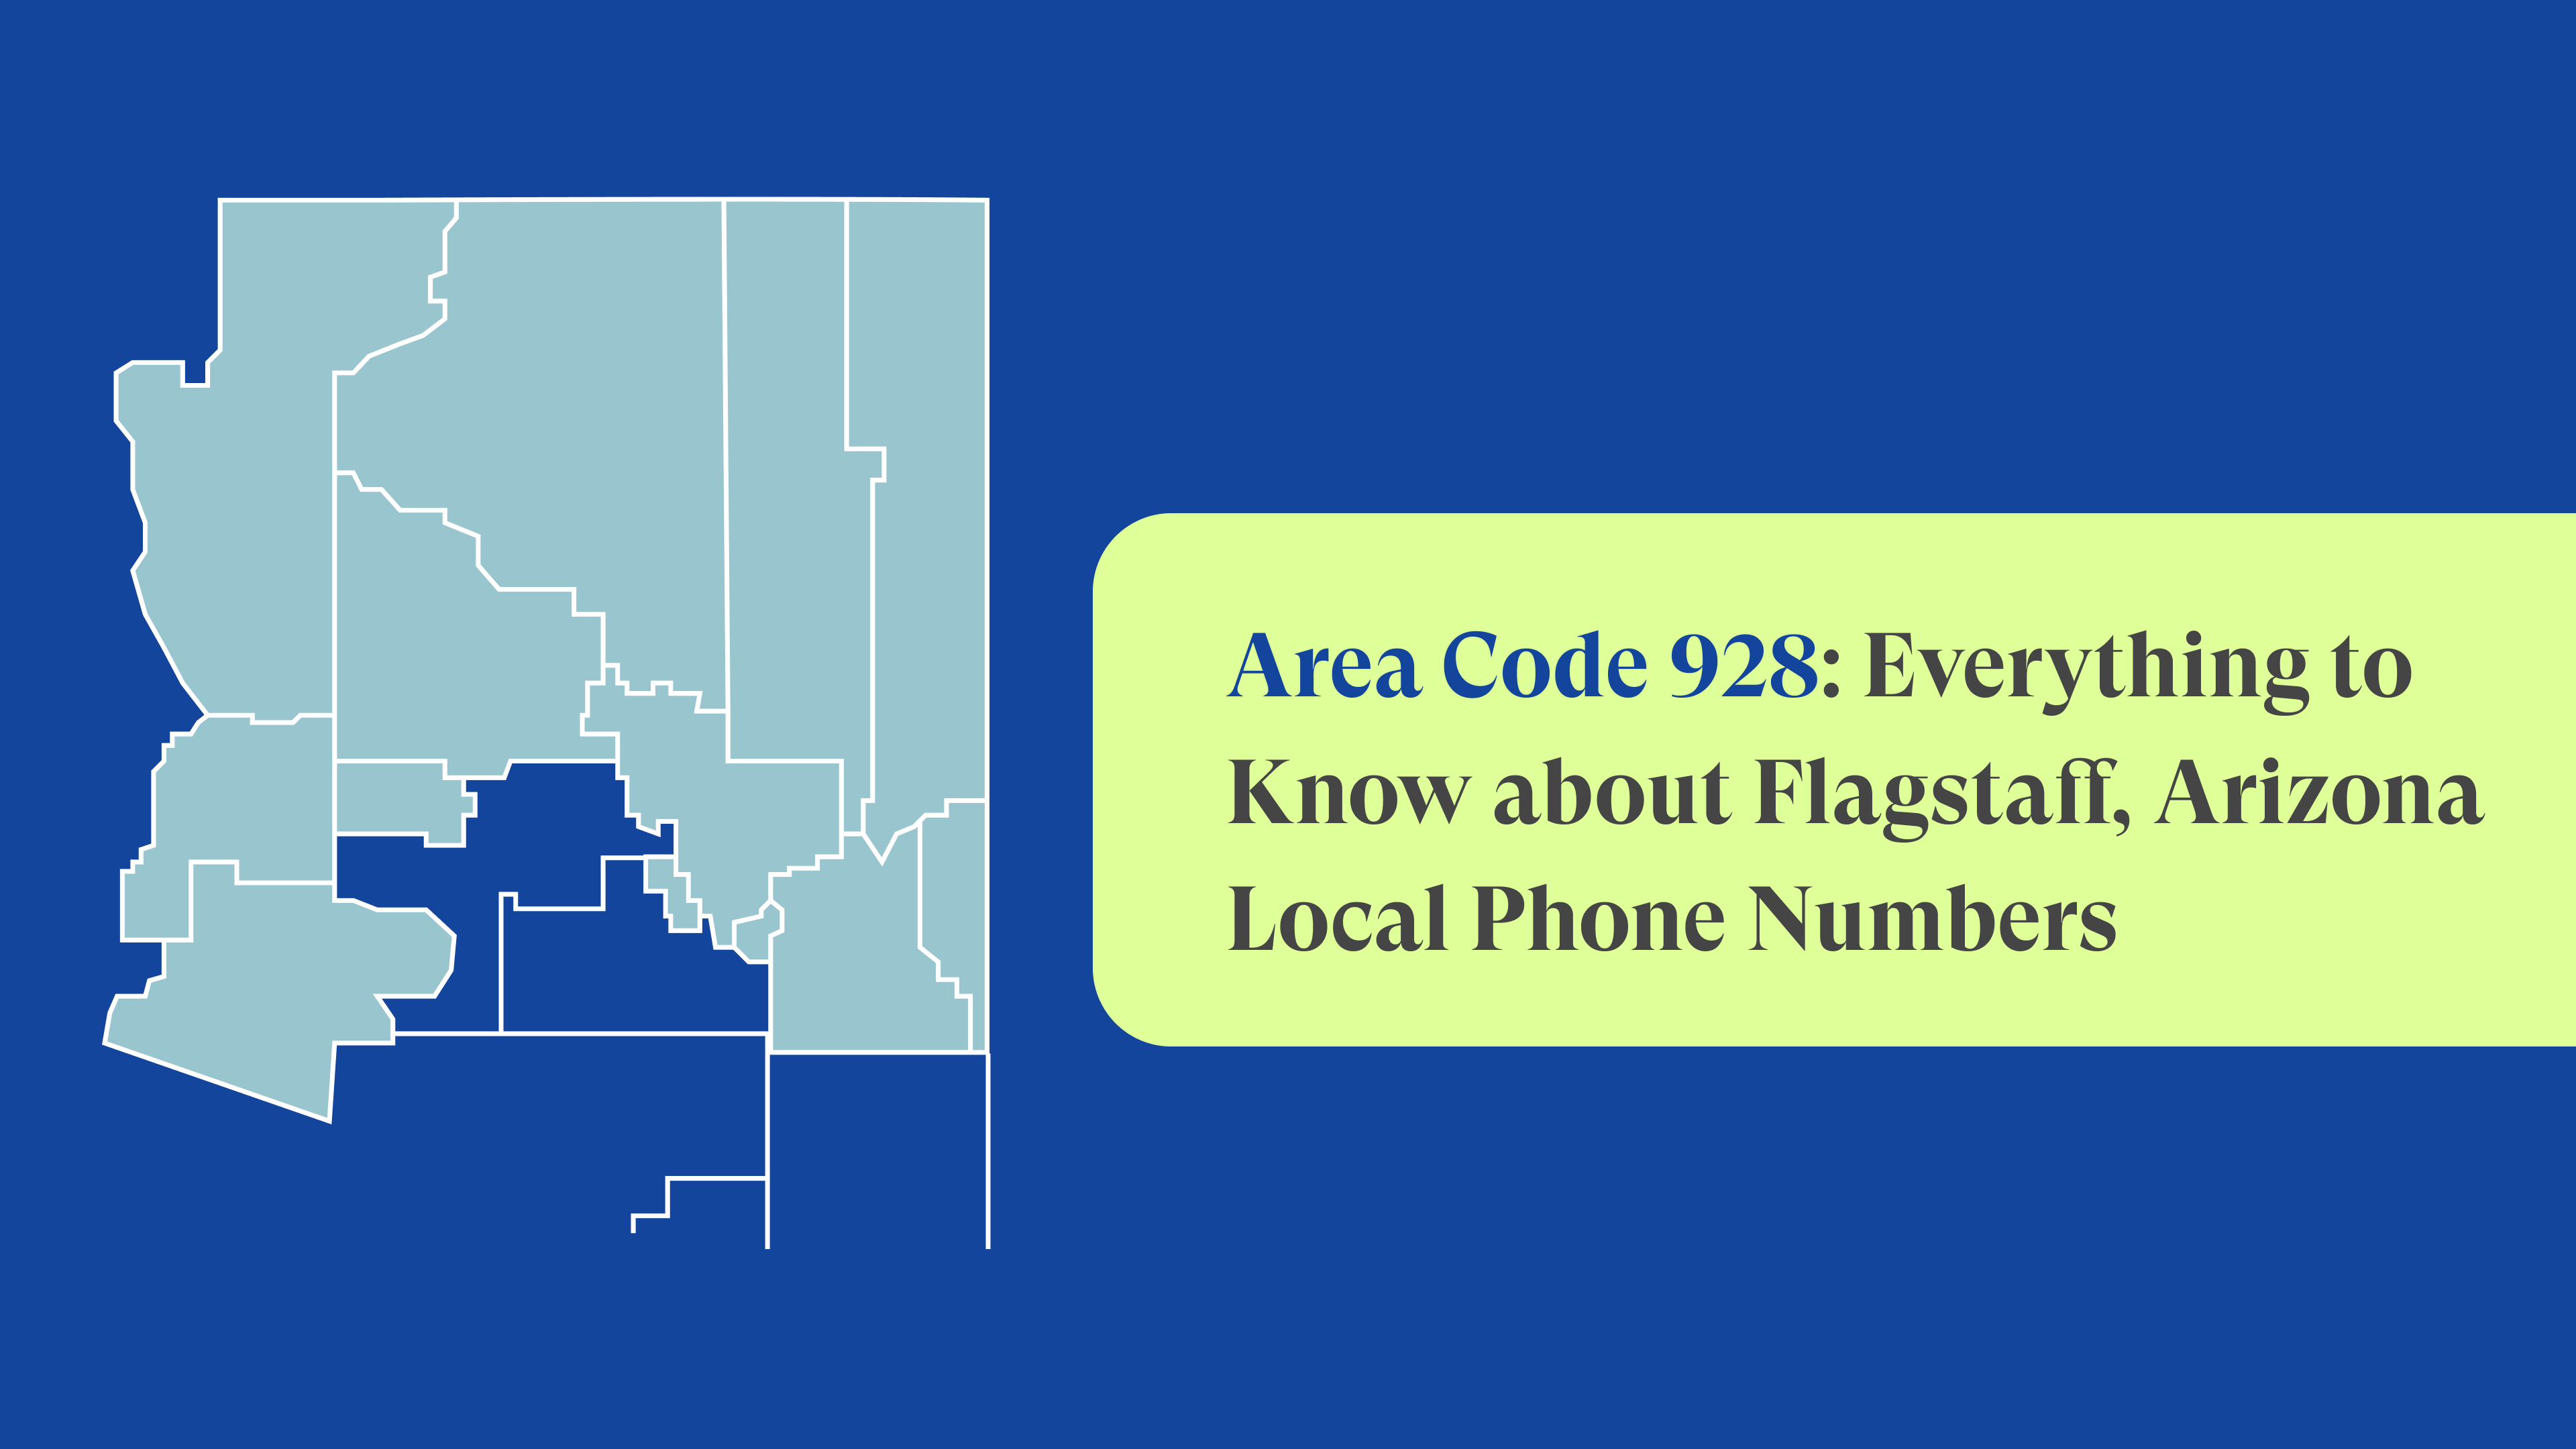 Area Code 928: Flagstaff, Arizona Local Phone Numbers